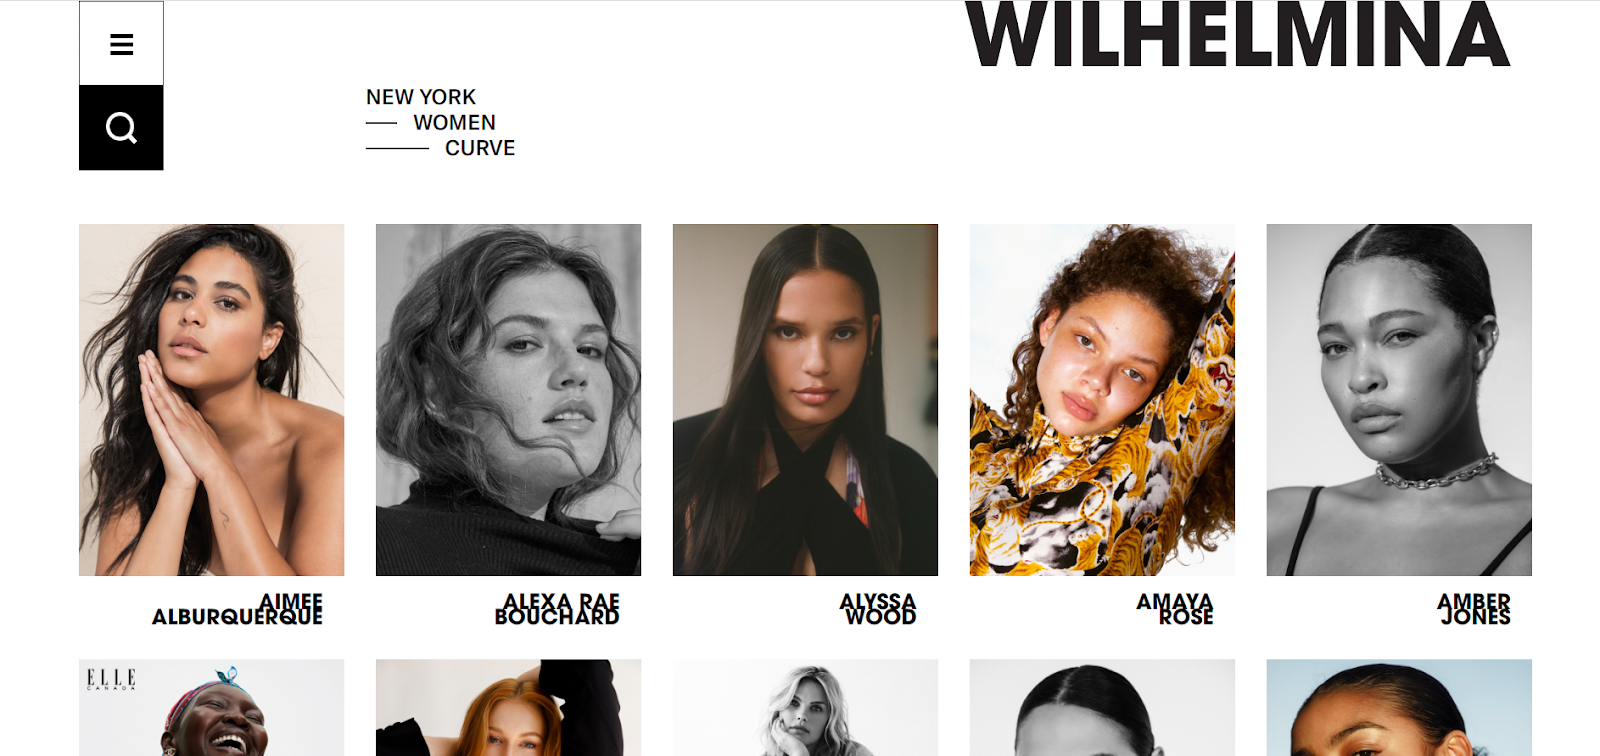 Wilhelmina Curve Models